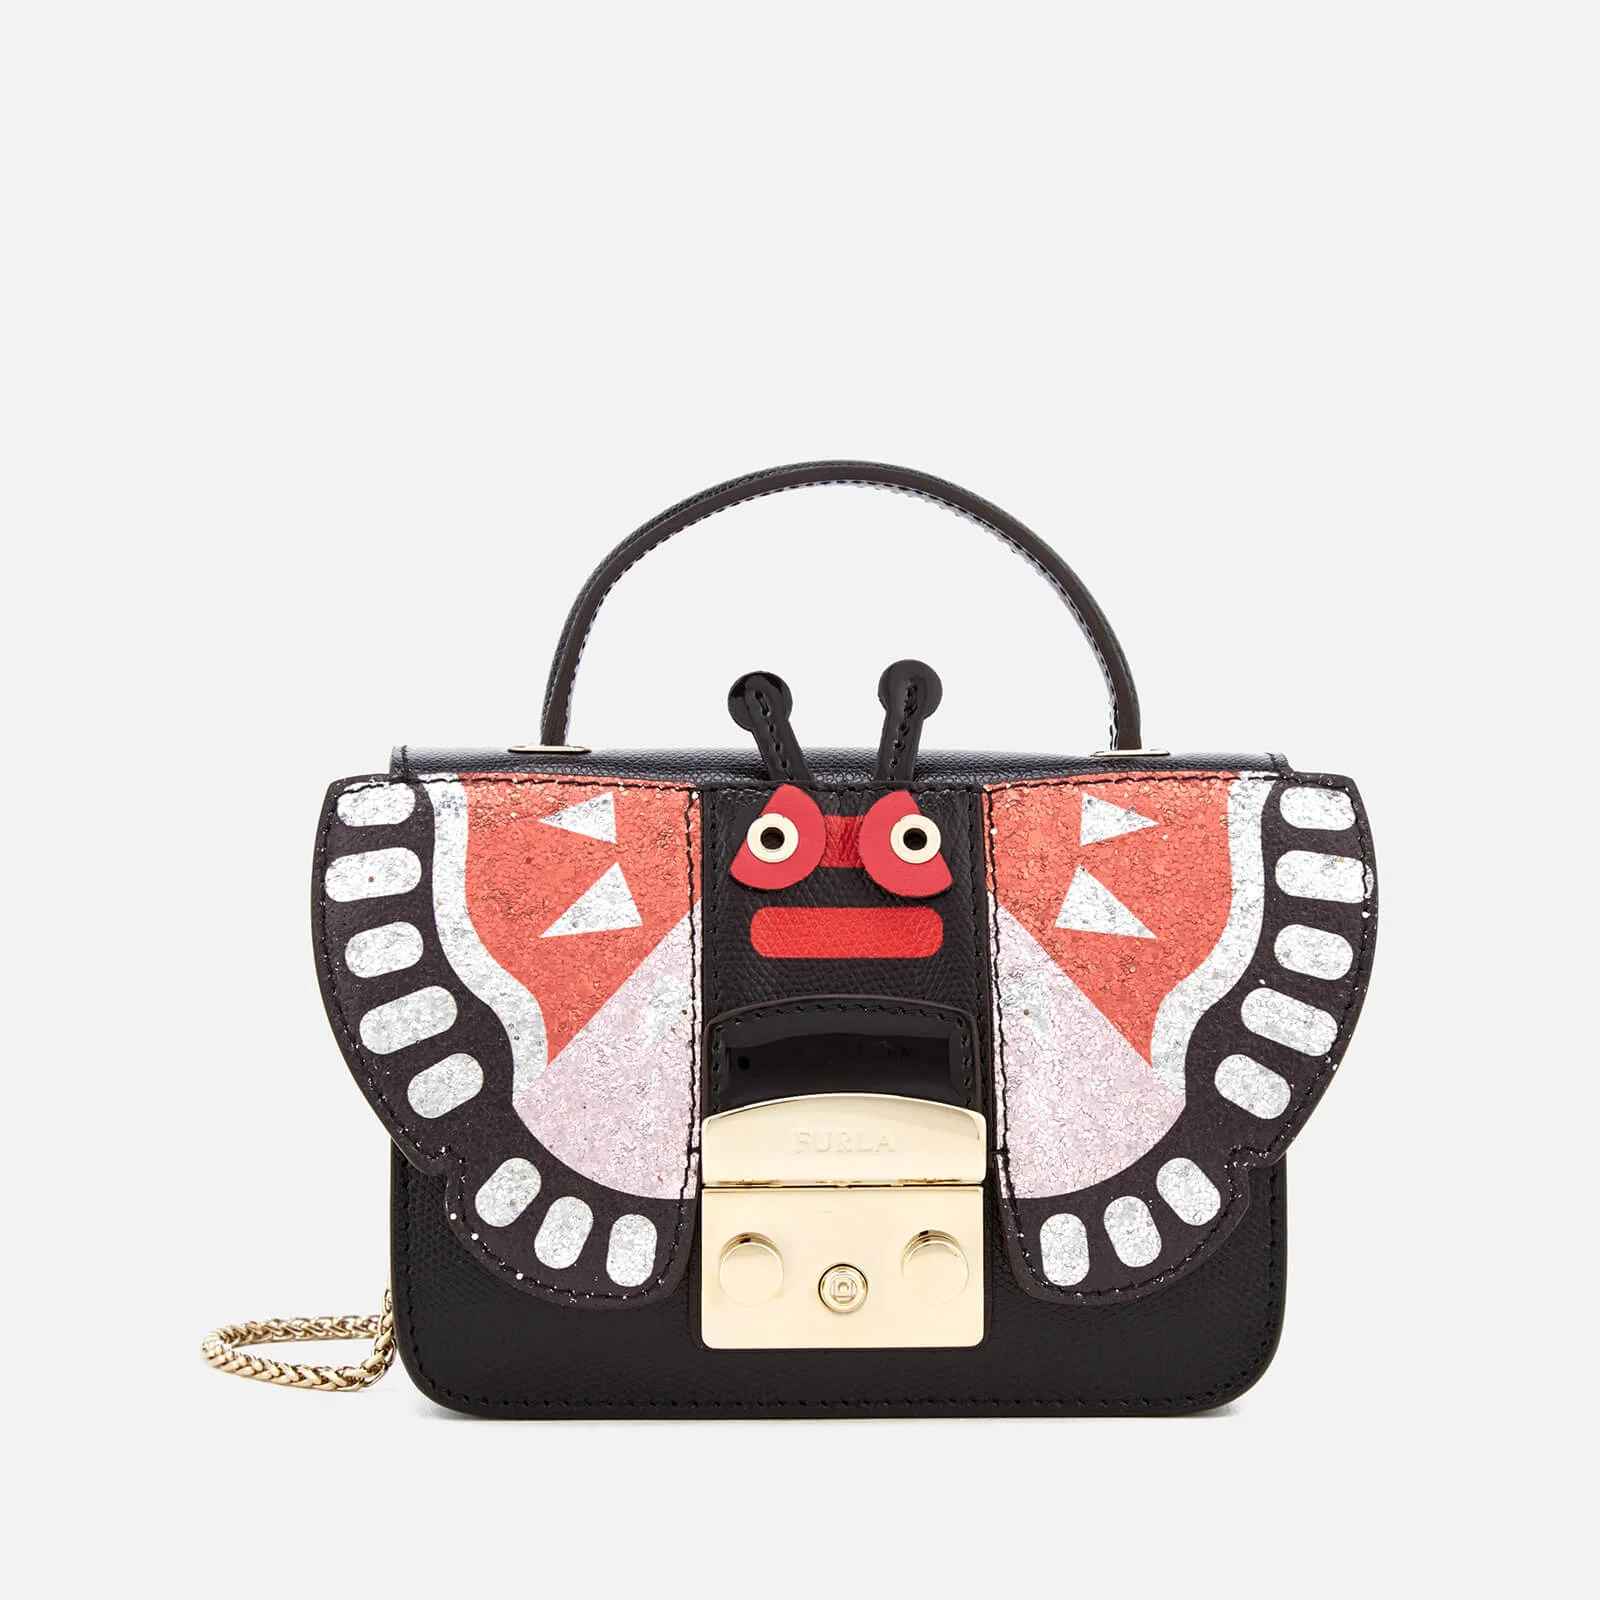 Furla Women's Metropolis Doodle Mini Top Handle Bag - Black/Ruby Image 1